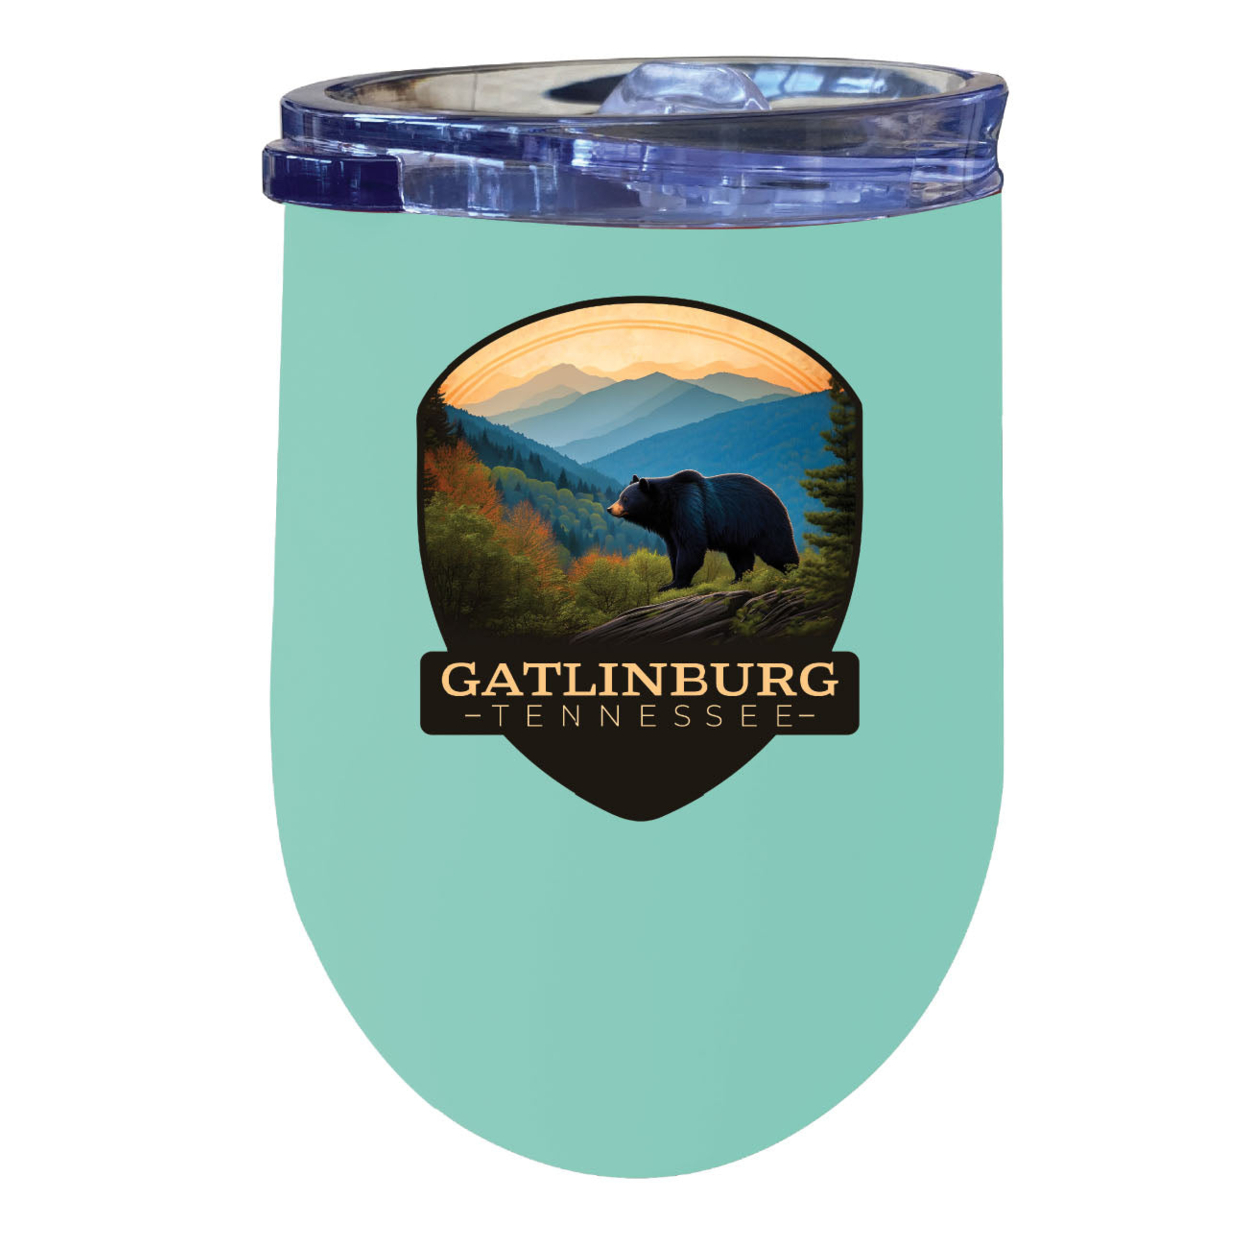 Gatlinburg Tennessee Souvenir 12 Oz Insulated Wine Stainless Steel Tumbler - Seafoam, A